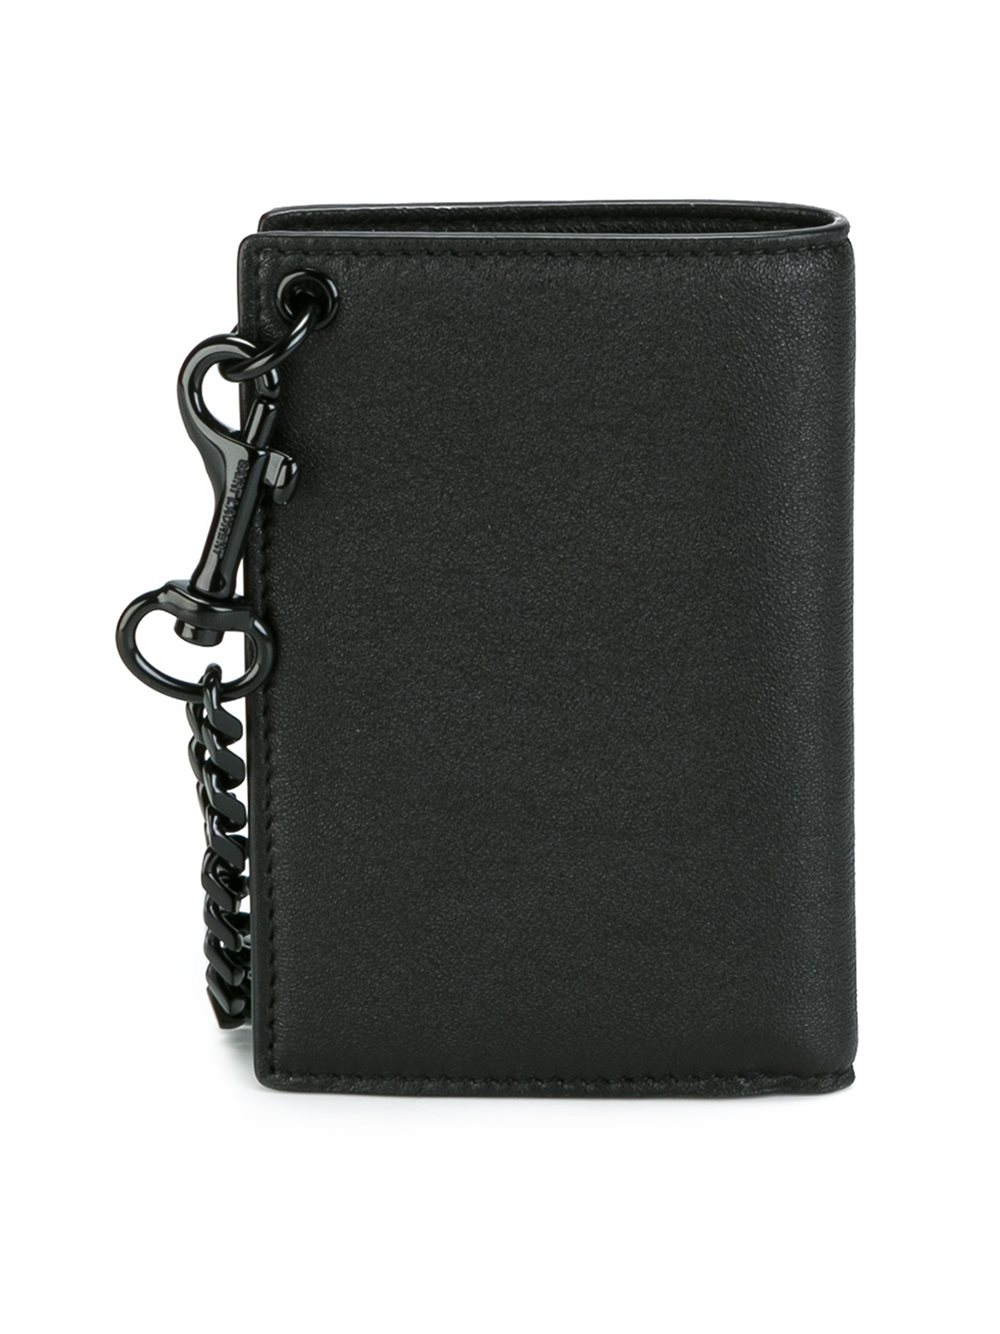 Lyst - Saint Laurent Key Chain Wallet in Black for Men